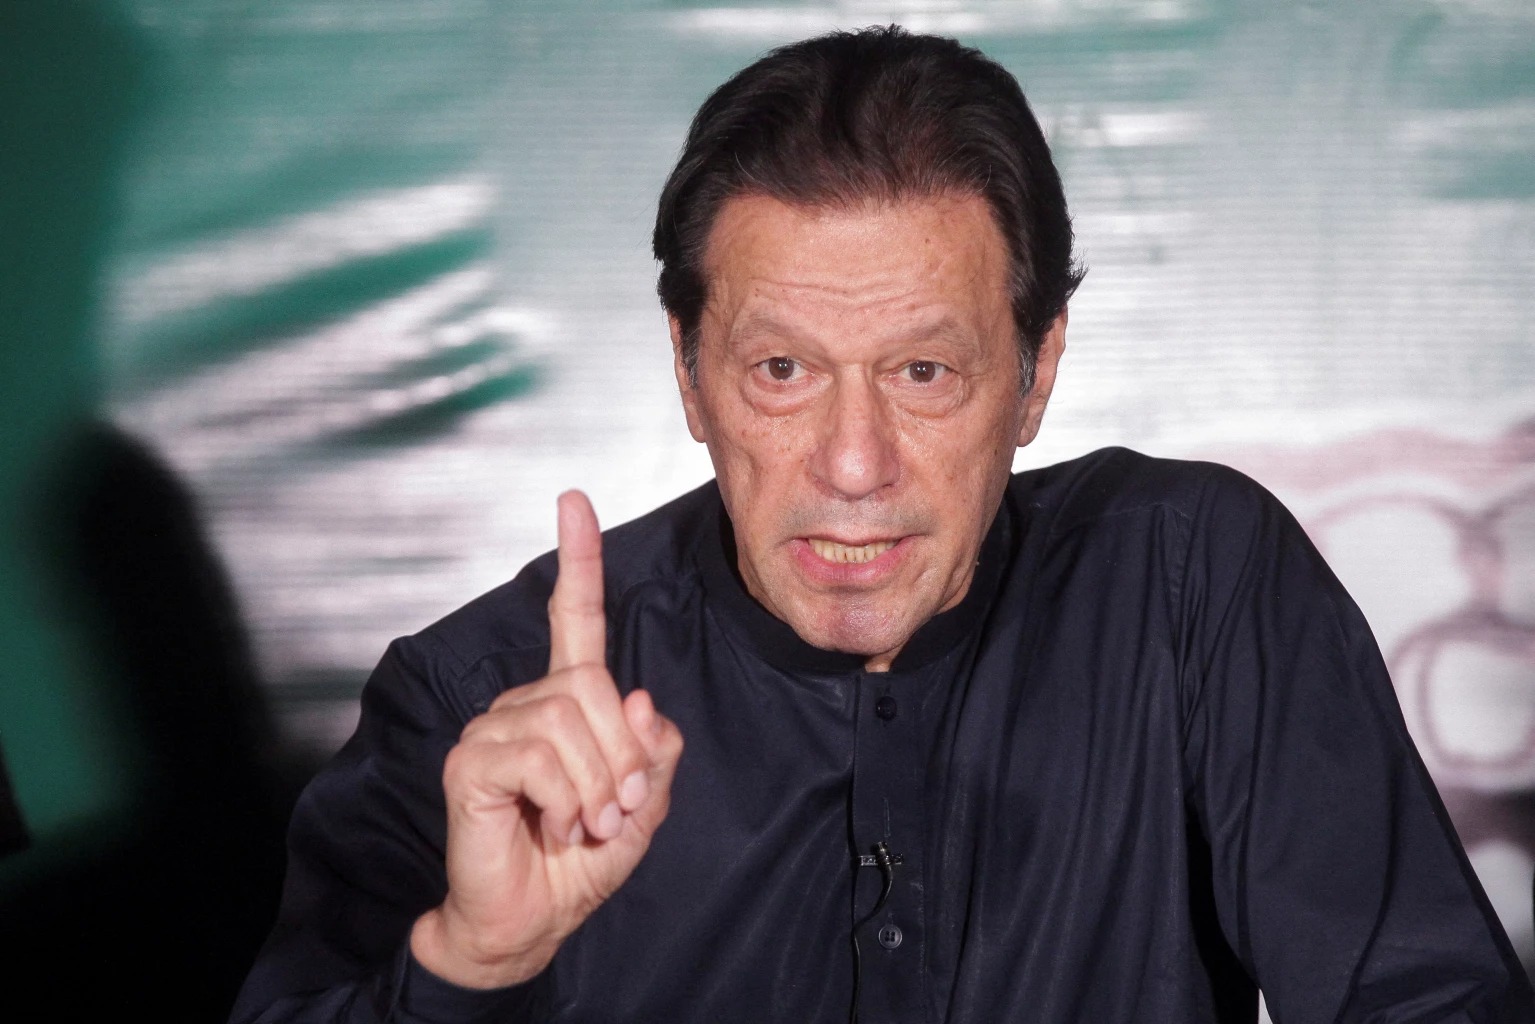 Former Pakistani Prime Minister Imran Khan Receives 14-Year Sentence for Corruption